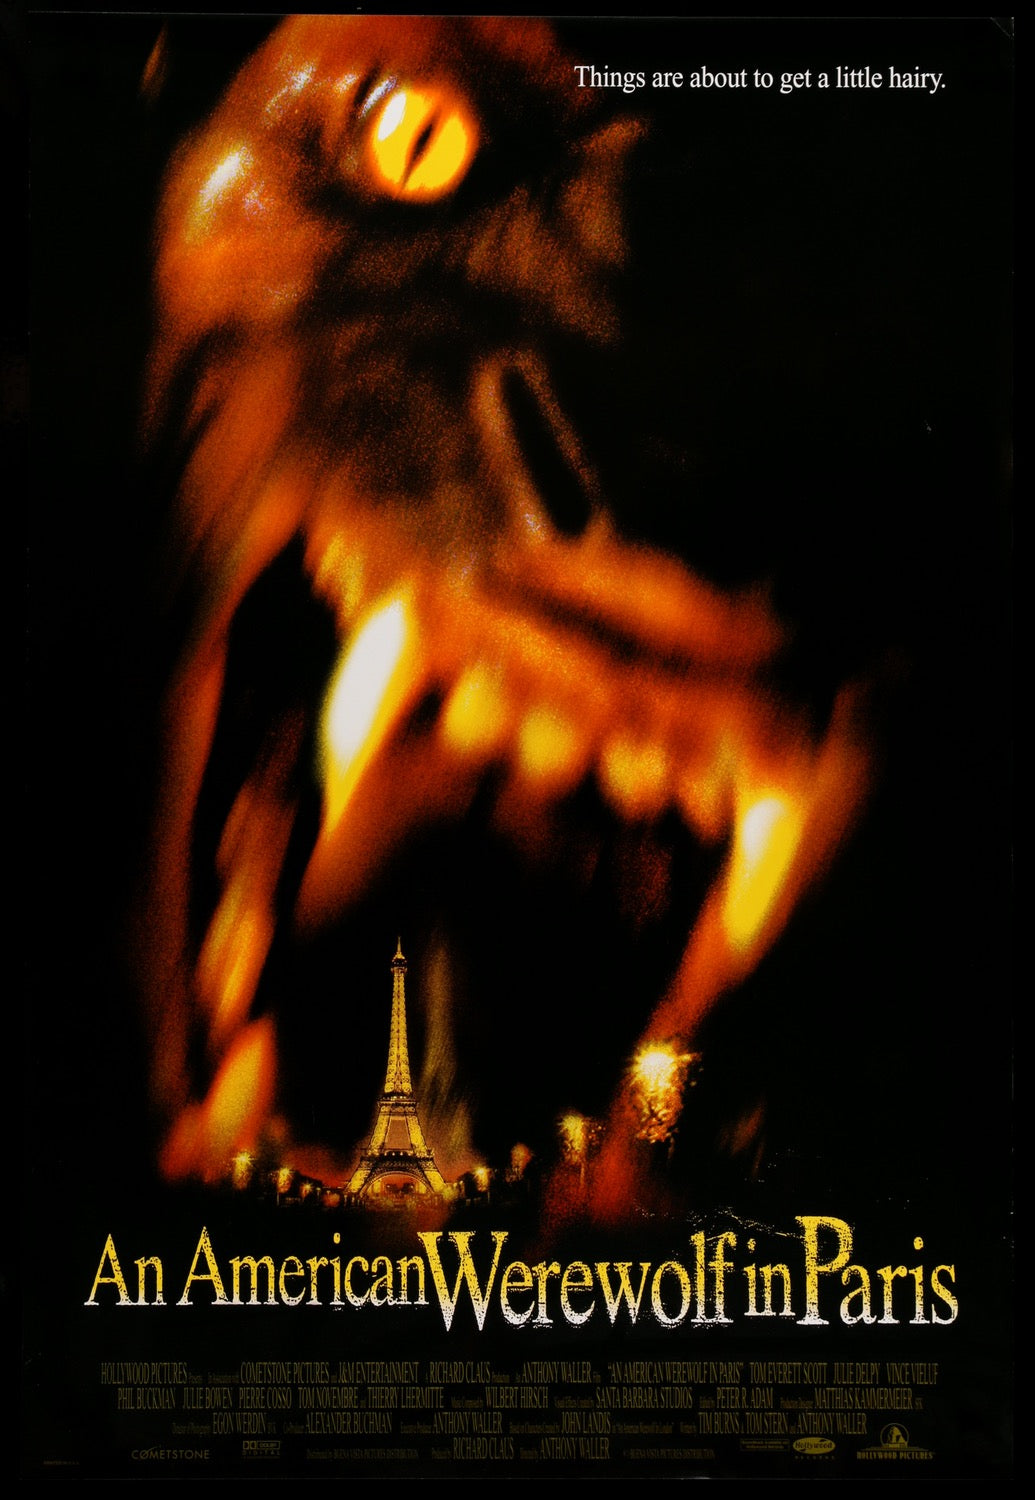 American Werewolf in Paris (1997) original movie poster for sale at Original Film Art